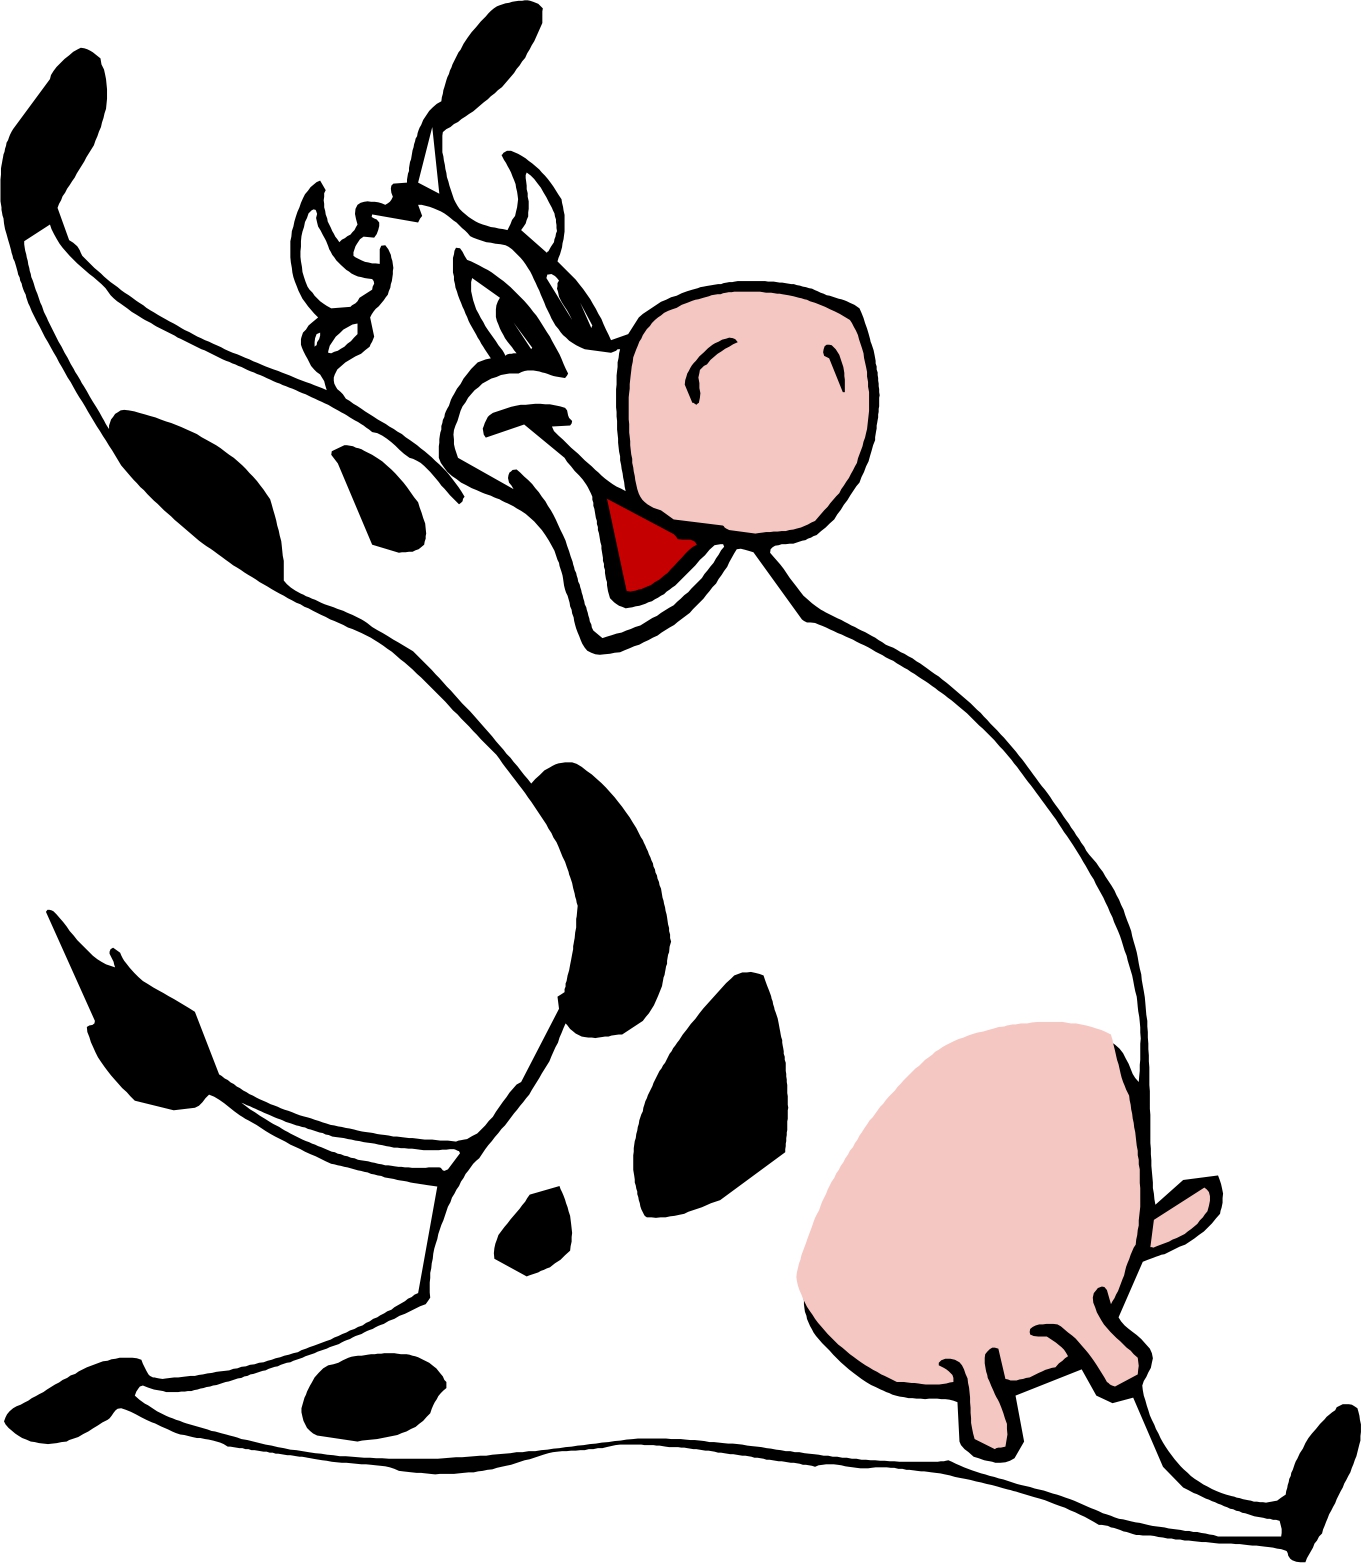 Cartoon Of A Cow - ClipArt Best